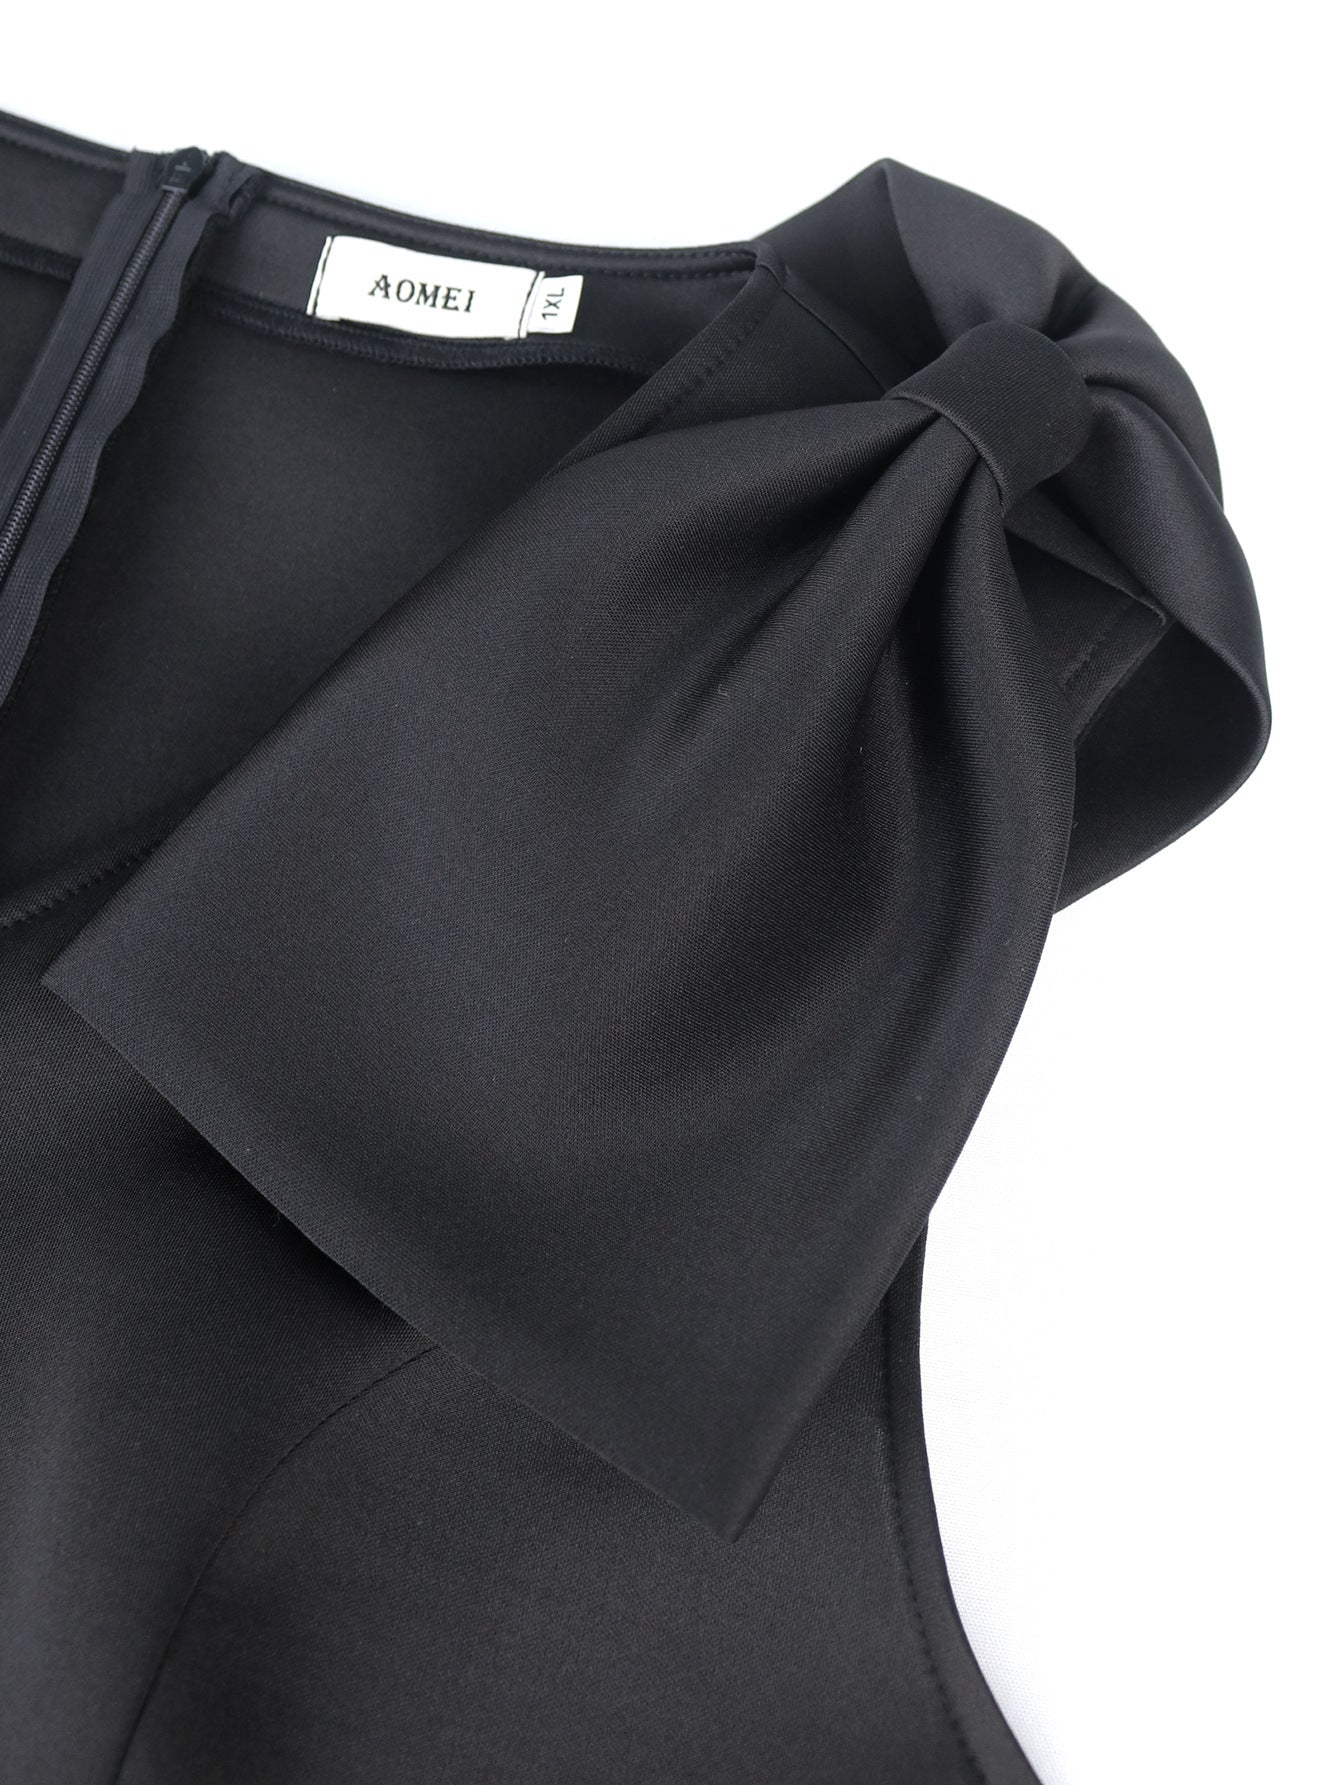 Sexy Sleeveless Plus Sizes Black Party Dresses-Dresses-Black-S-Free Shipping Leatheretro